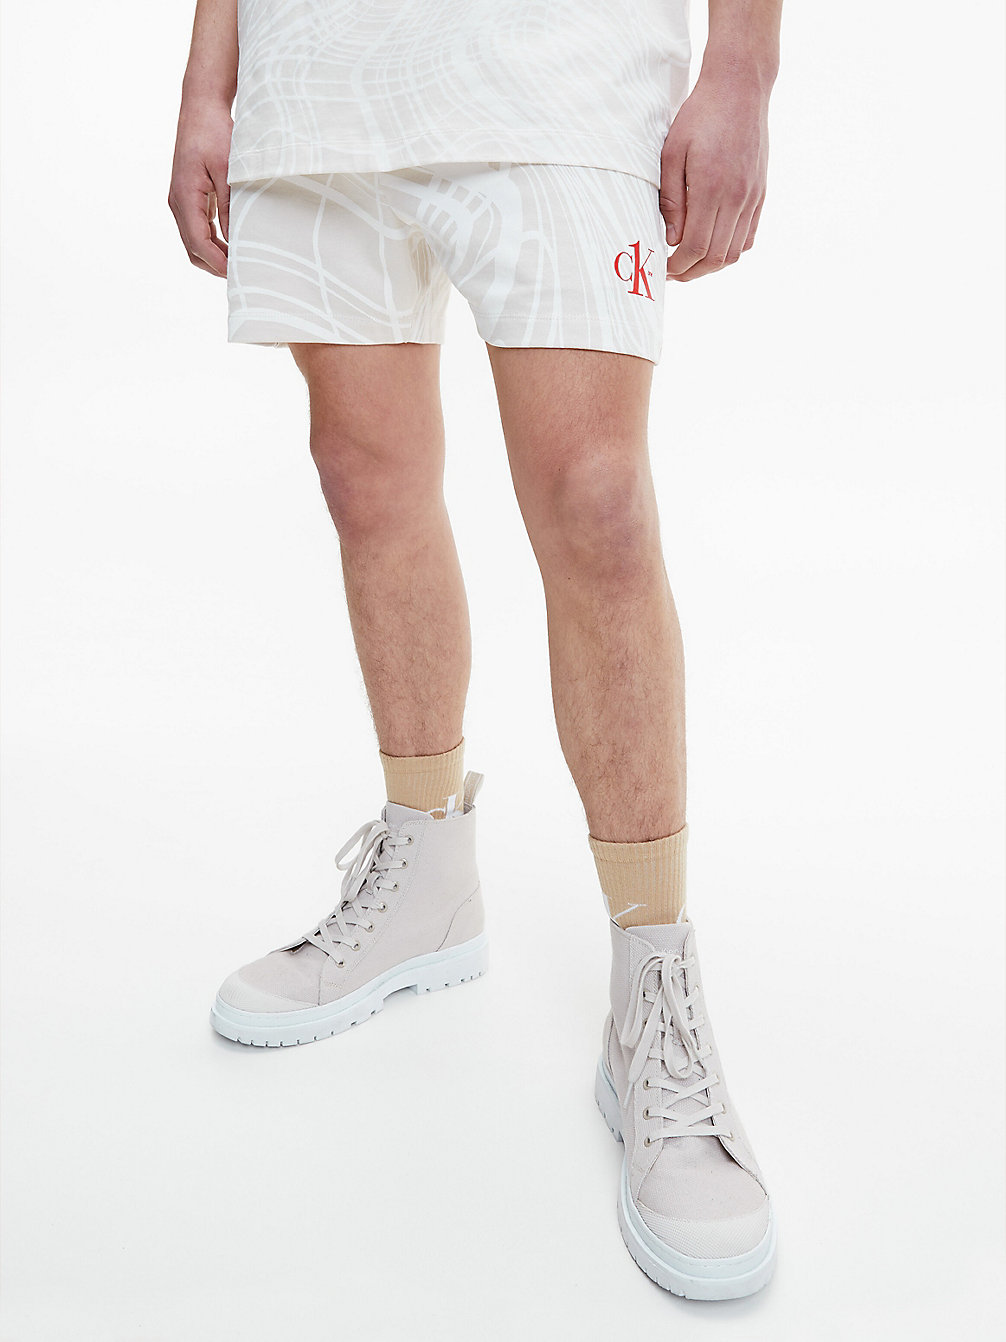 CRESCENT MOON Unisex Recycled Cotton Shorts - CK One undefined unisex Calvin Klein